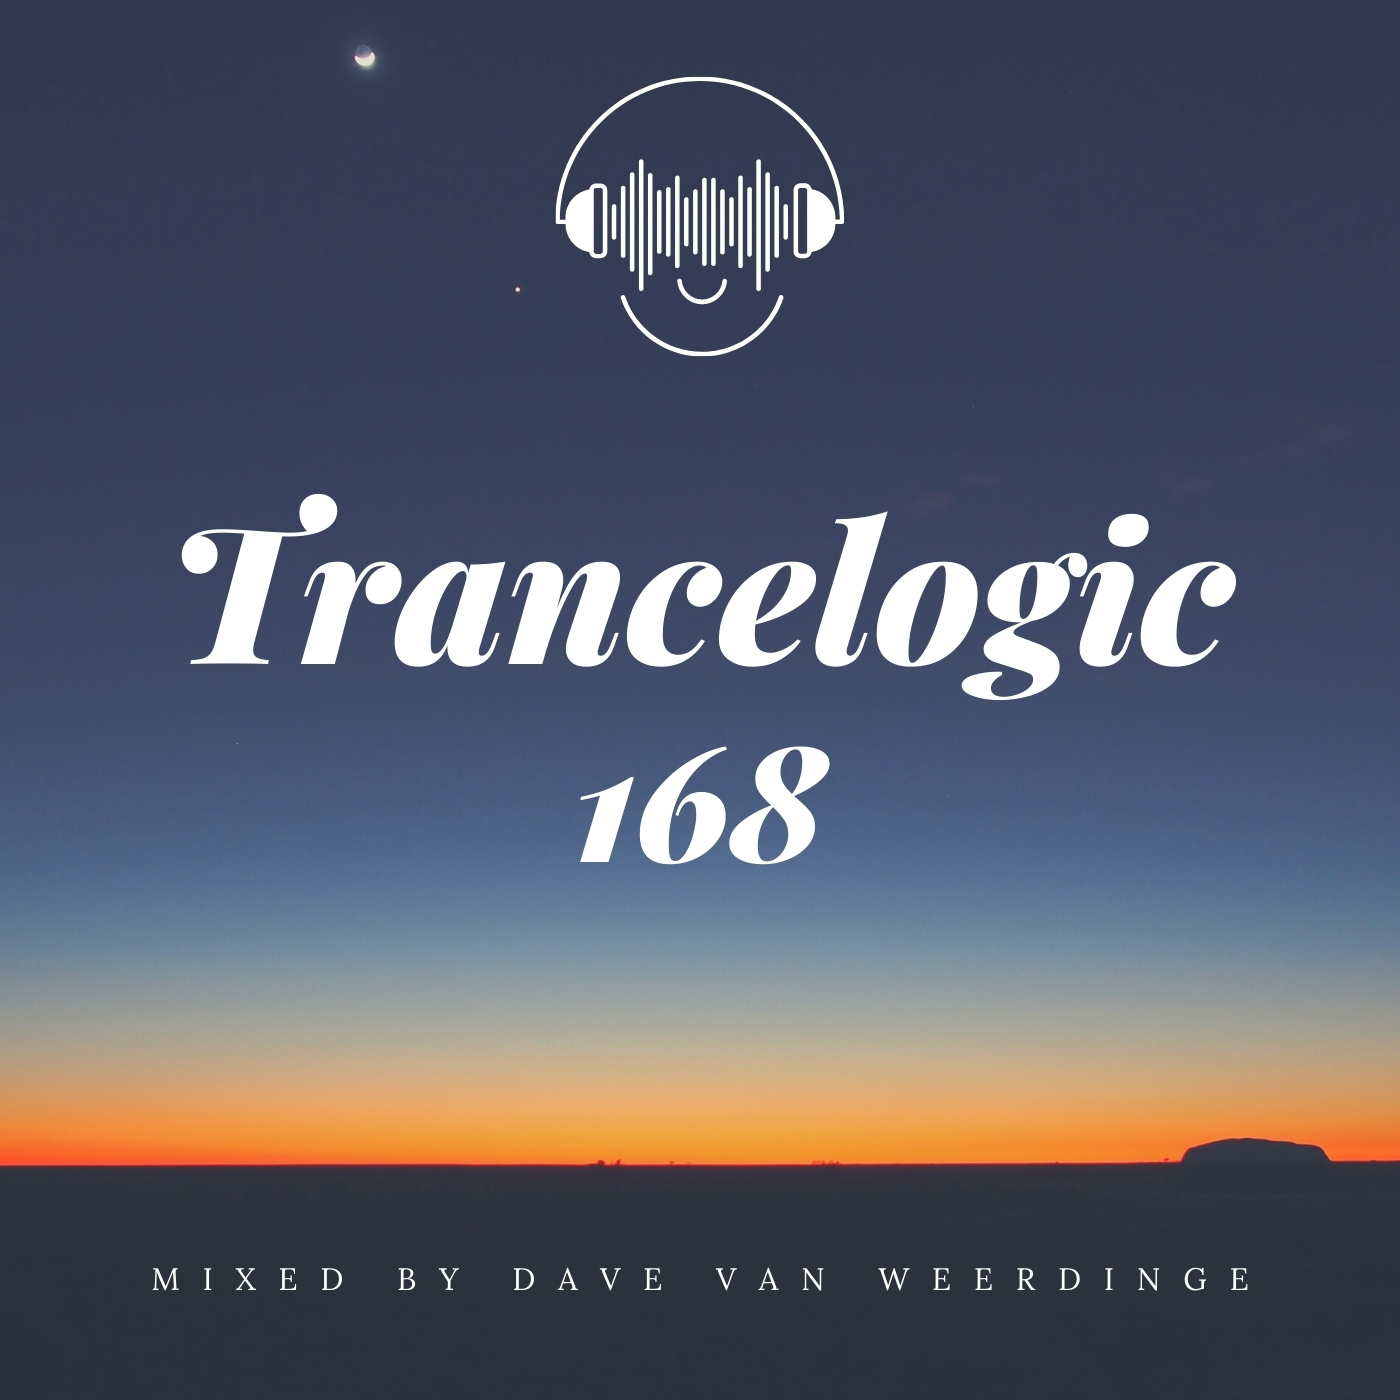 Trancelogic 168 by Dave van Weerdinge